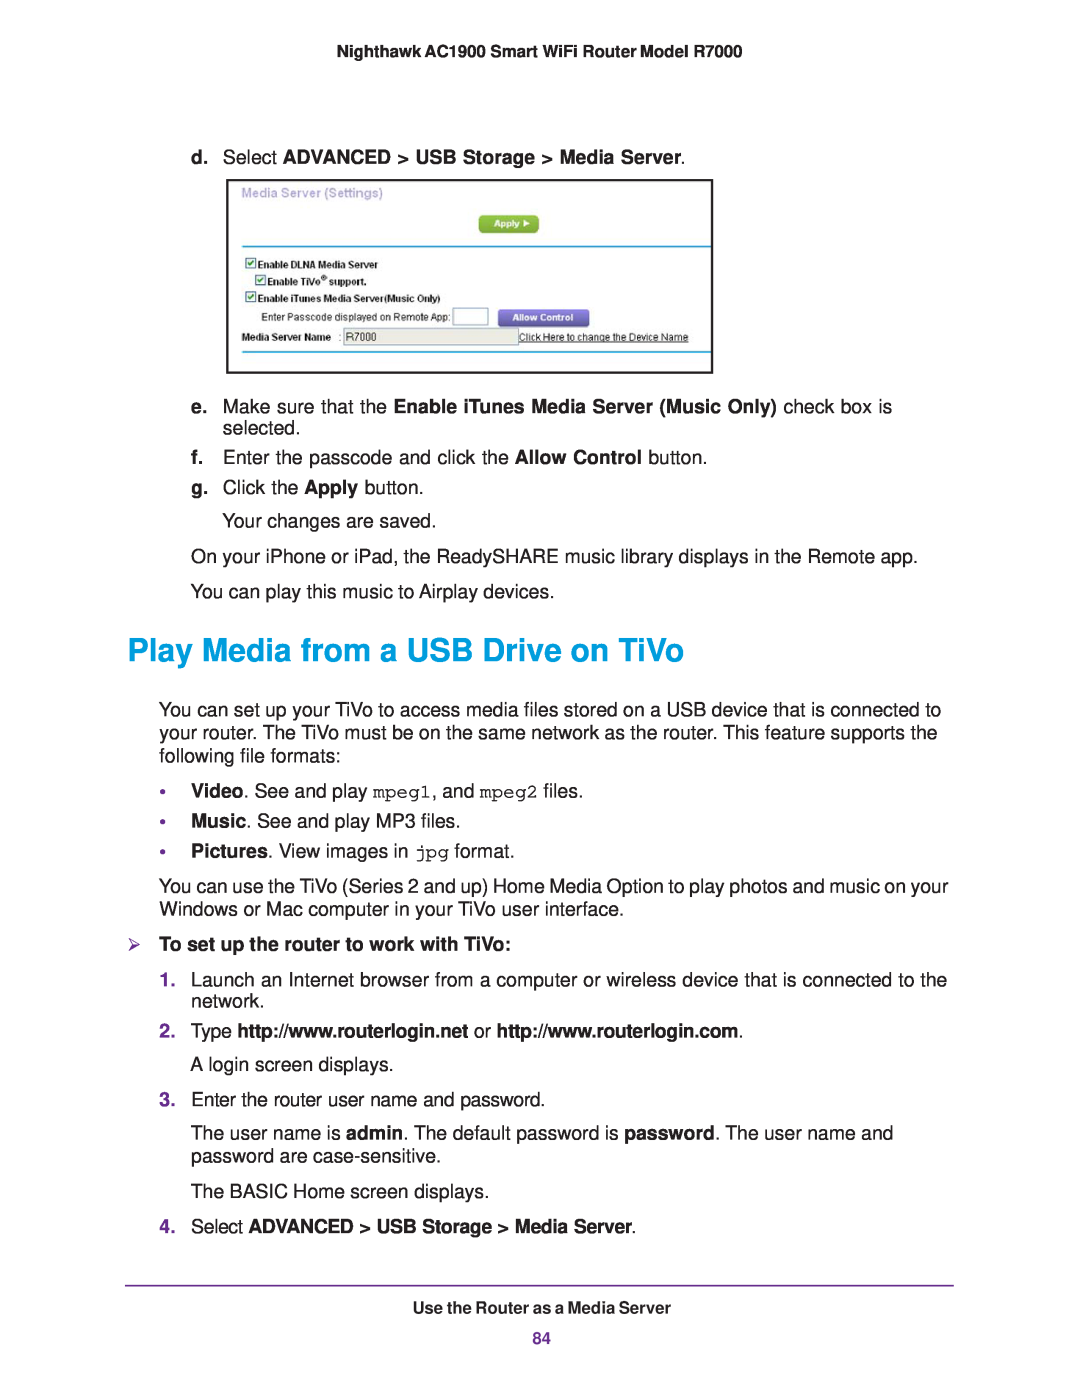 NETGEAR R7000 user manual Play Media from a USB Drive on TiVo, d. Select ADVANCED USB Storage Media Server 